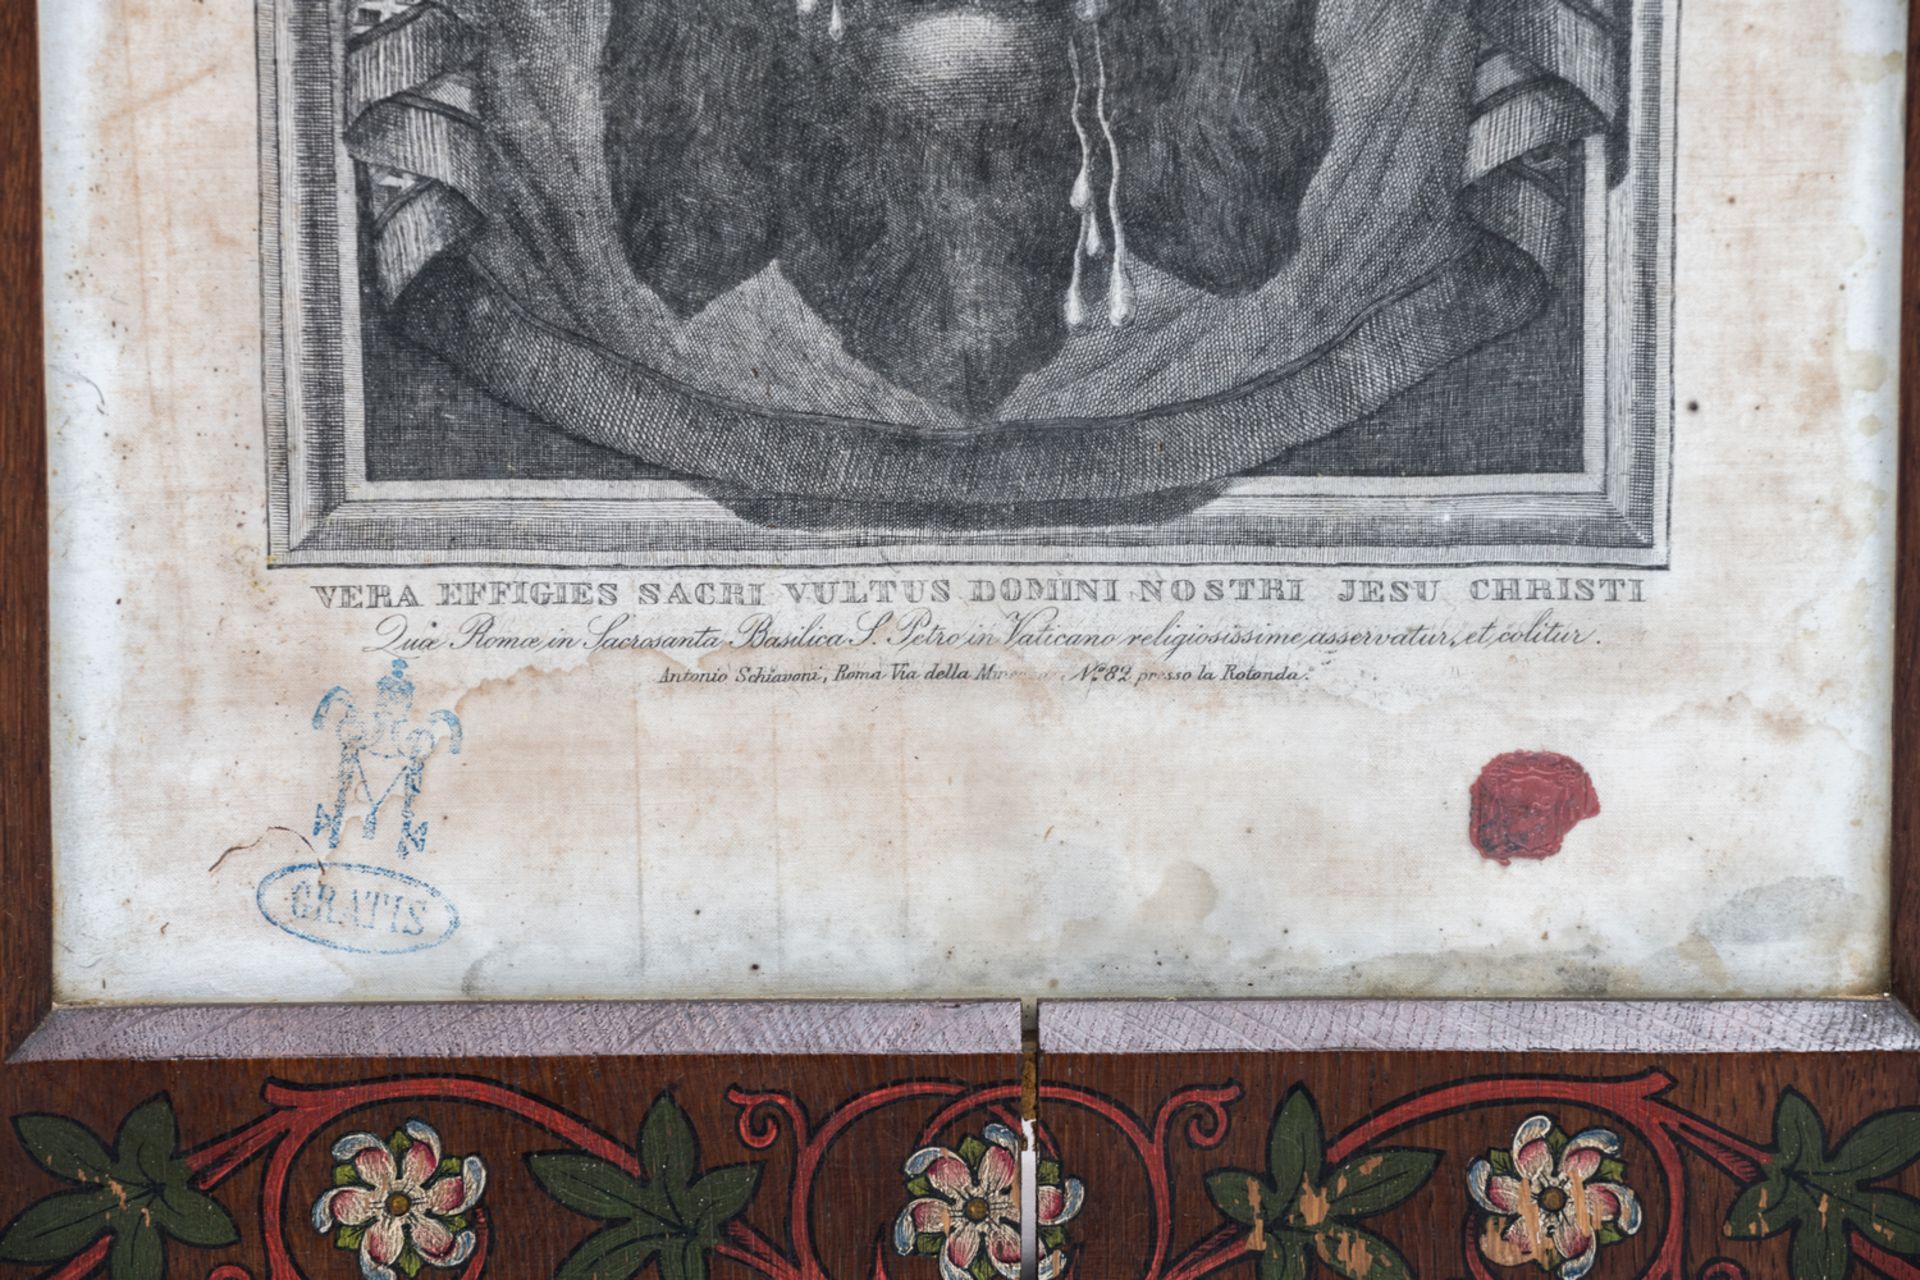 'Vera effigies sacre vultus domini nostri Jesu Christi', an engraving depicting the veil of - Bild 5 aus 6